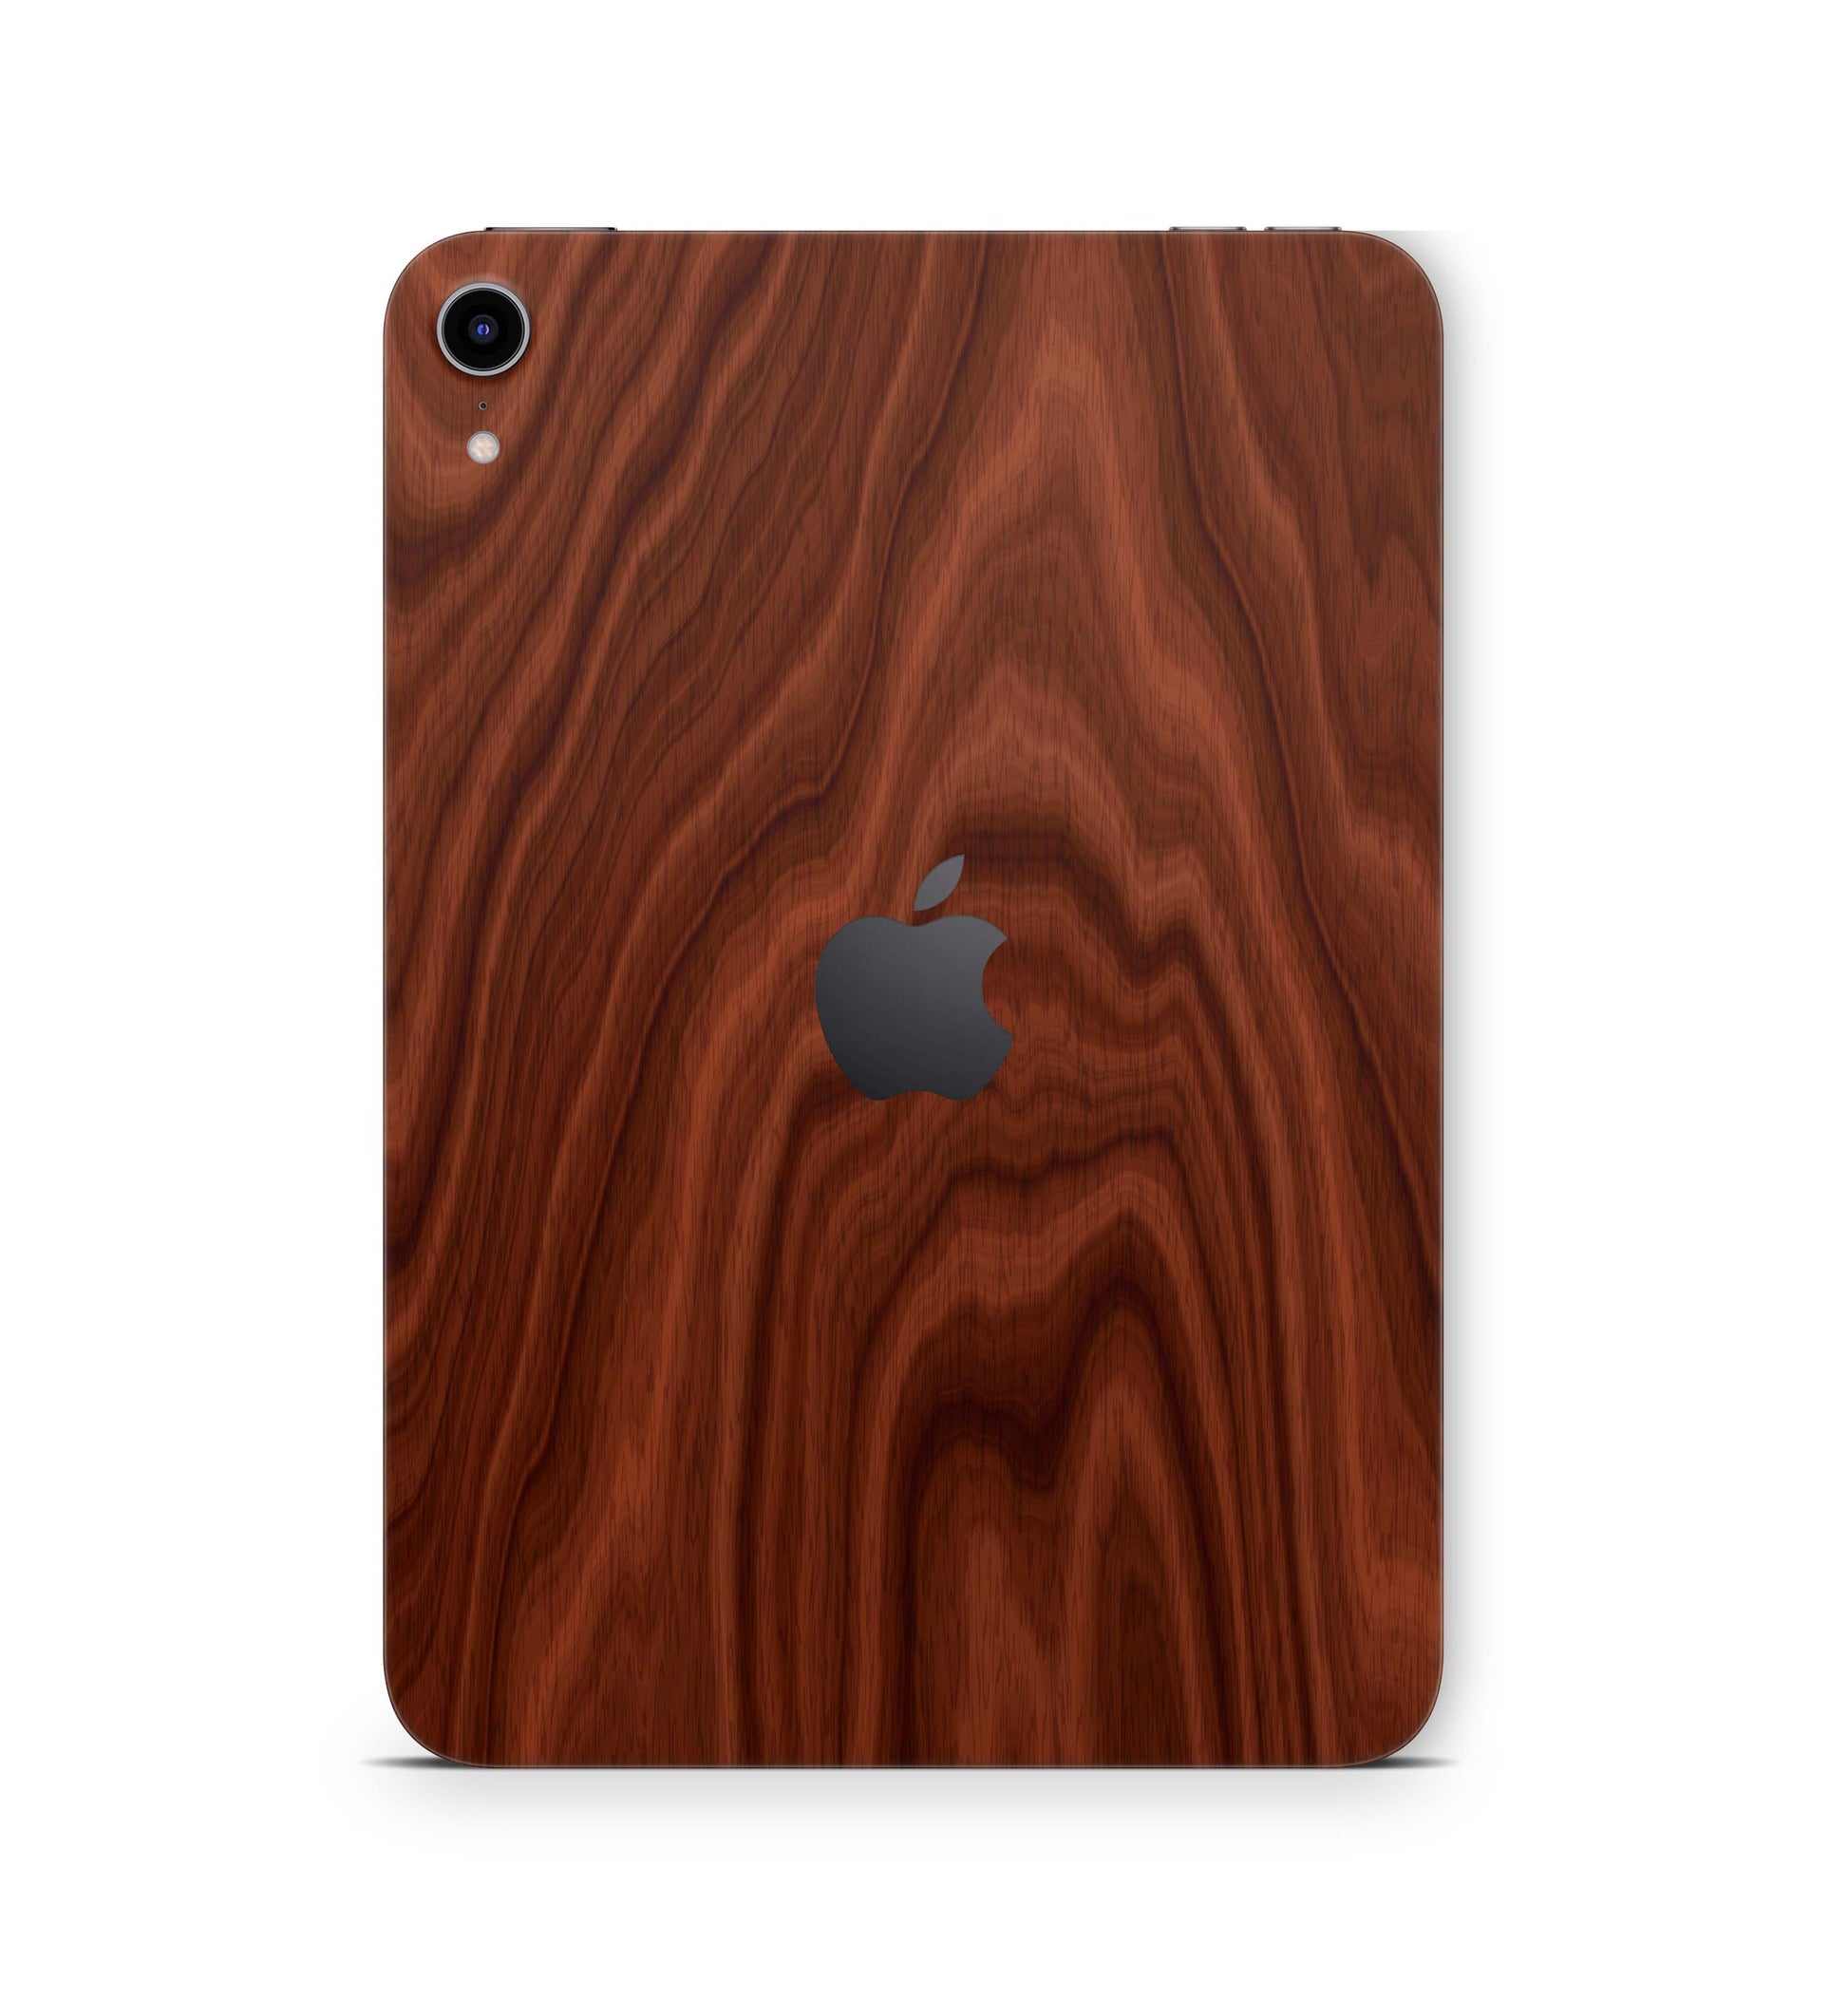 Apple iPad Skin Design Cover Folie Vinyl Skins & Wraps für alle iPad Modelle Aufkleber Skins4u Rosewood  